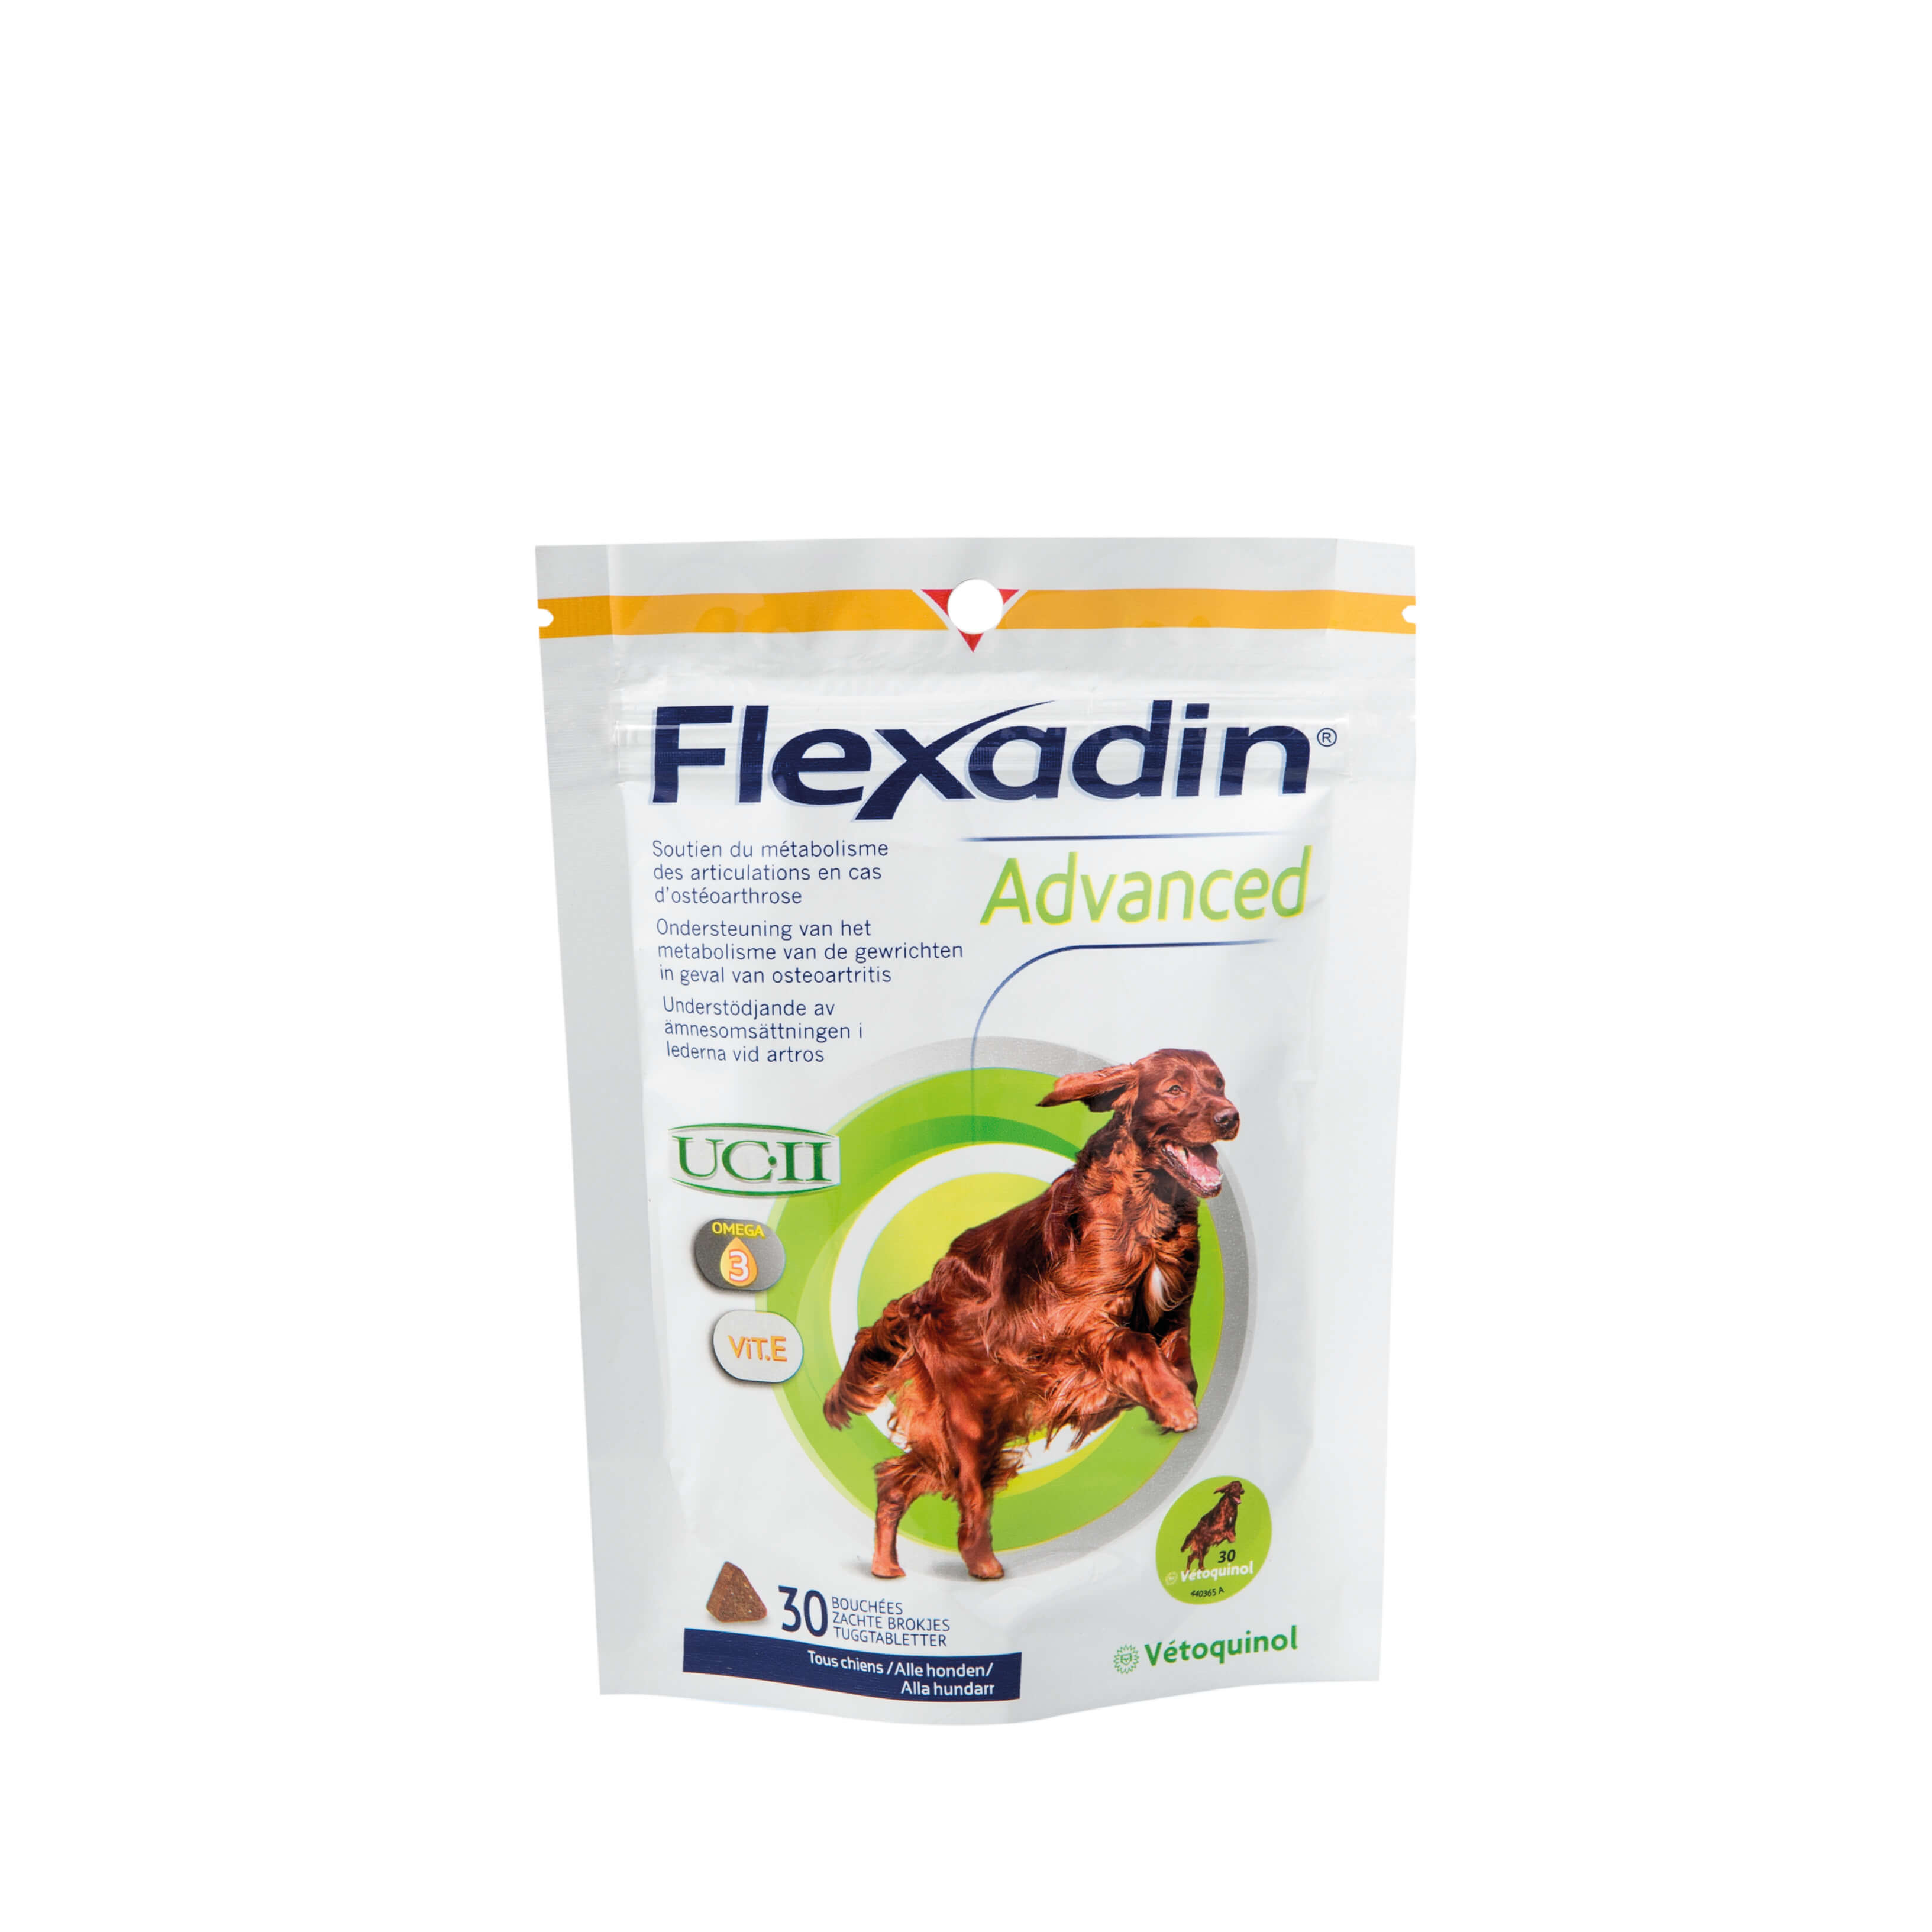 Flexadin Advanced : avis, test, prix - Conso Animo